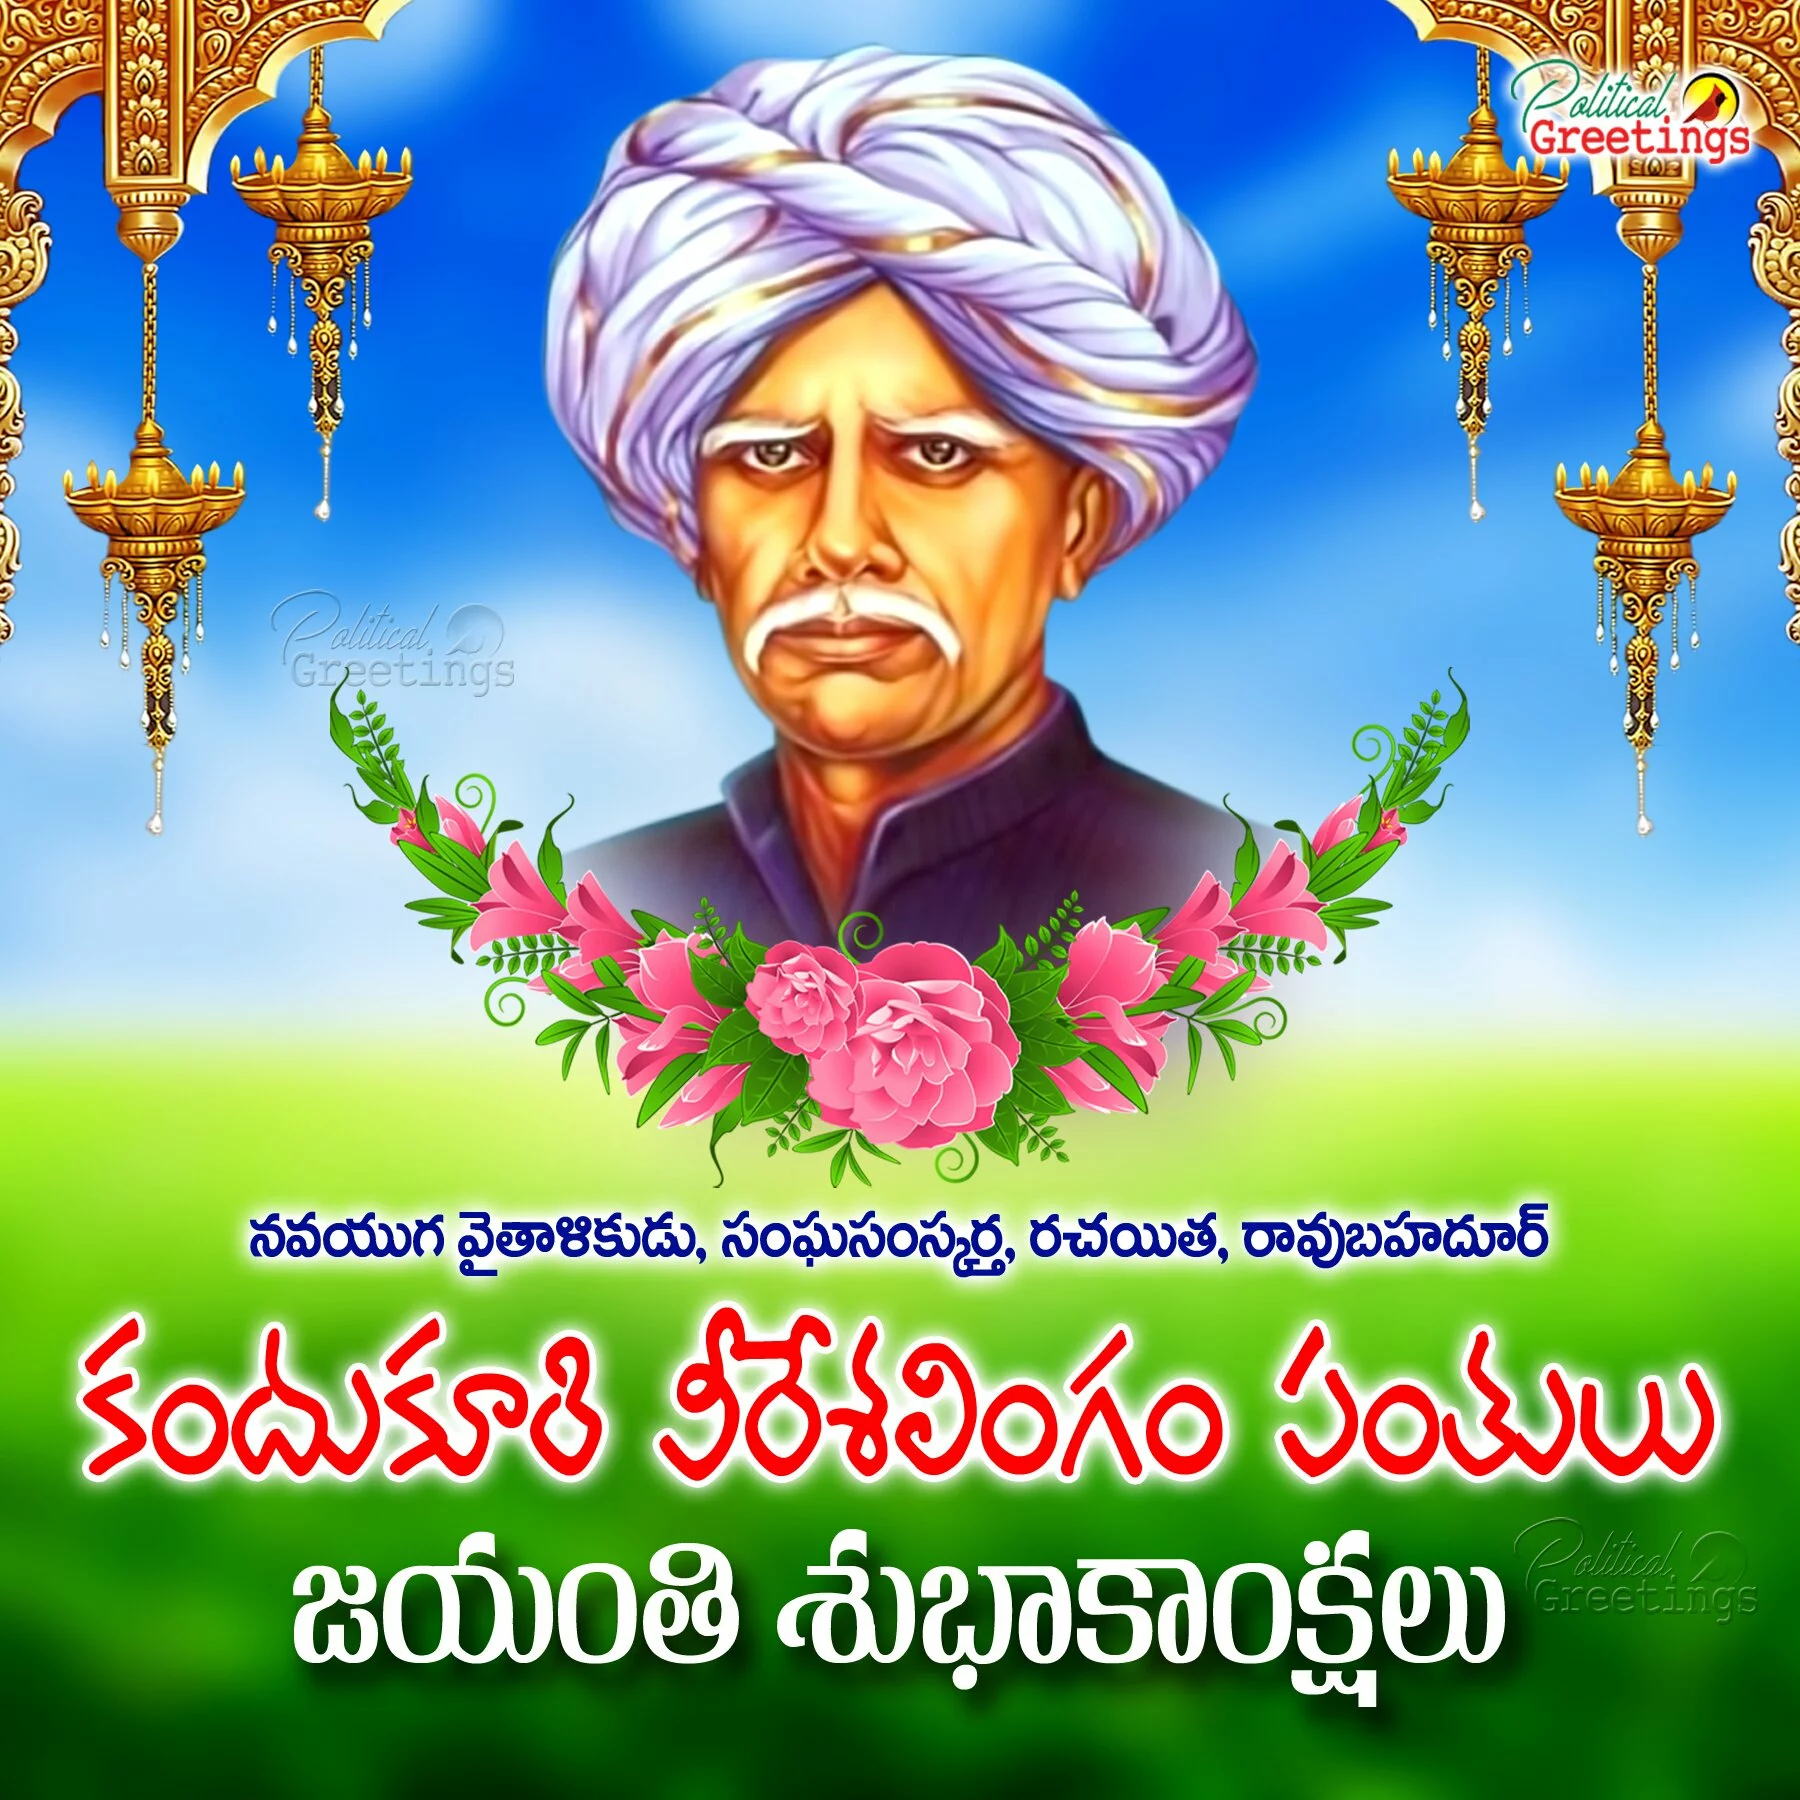 Kandukuri Veresalingam Pantulu Jayanthi Subhakamkshalu Images Telugu Quotes Pictures